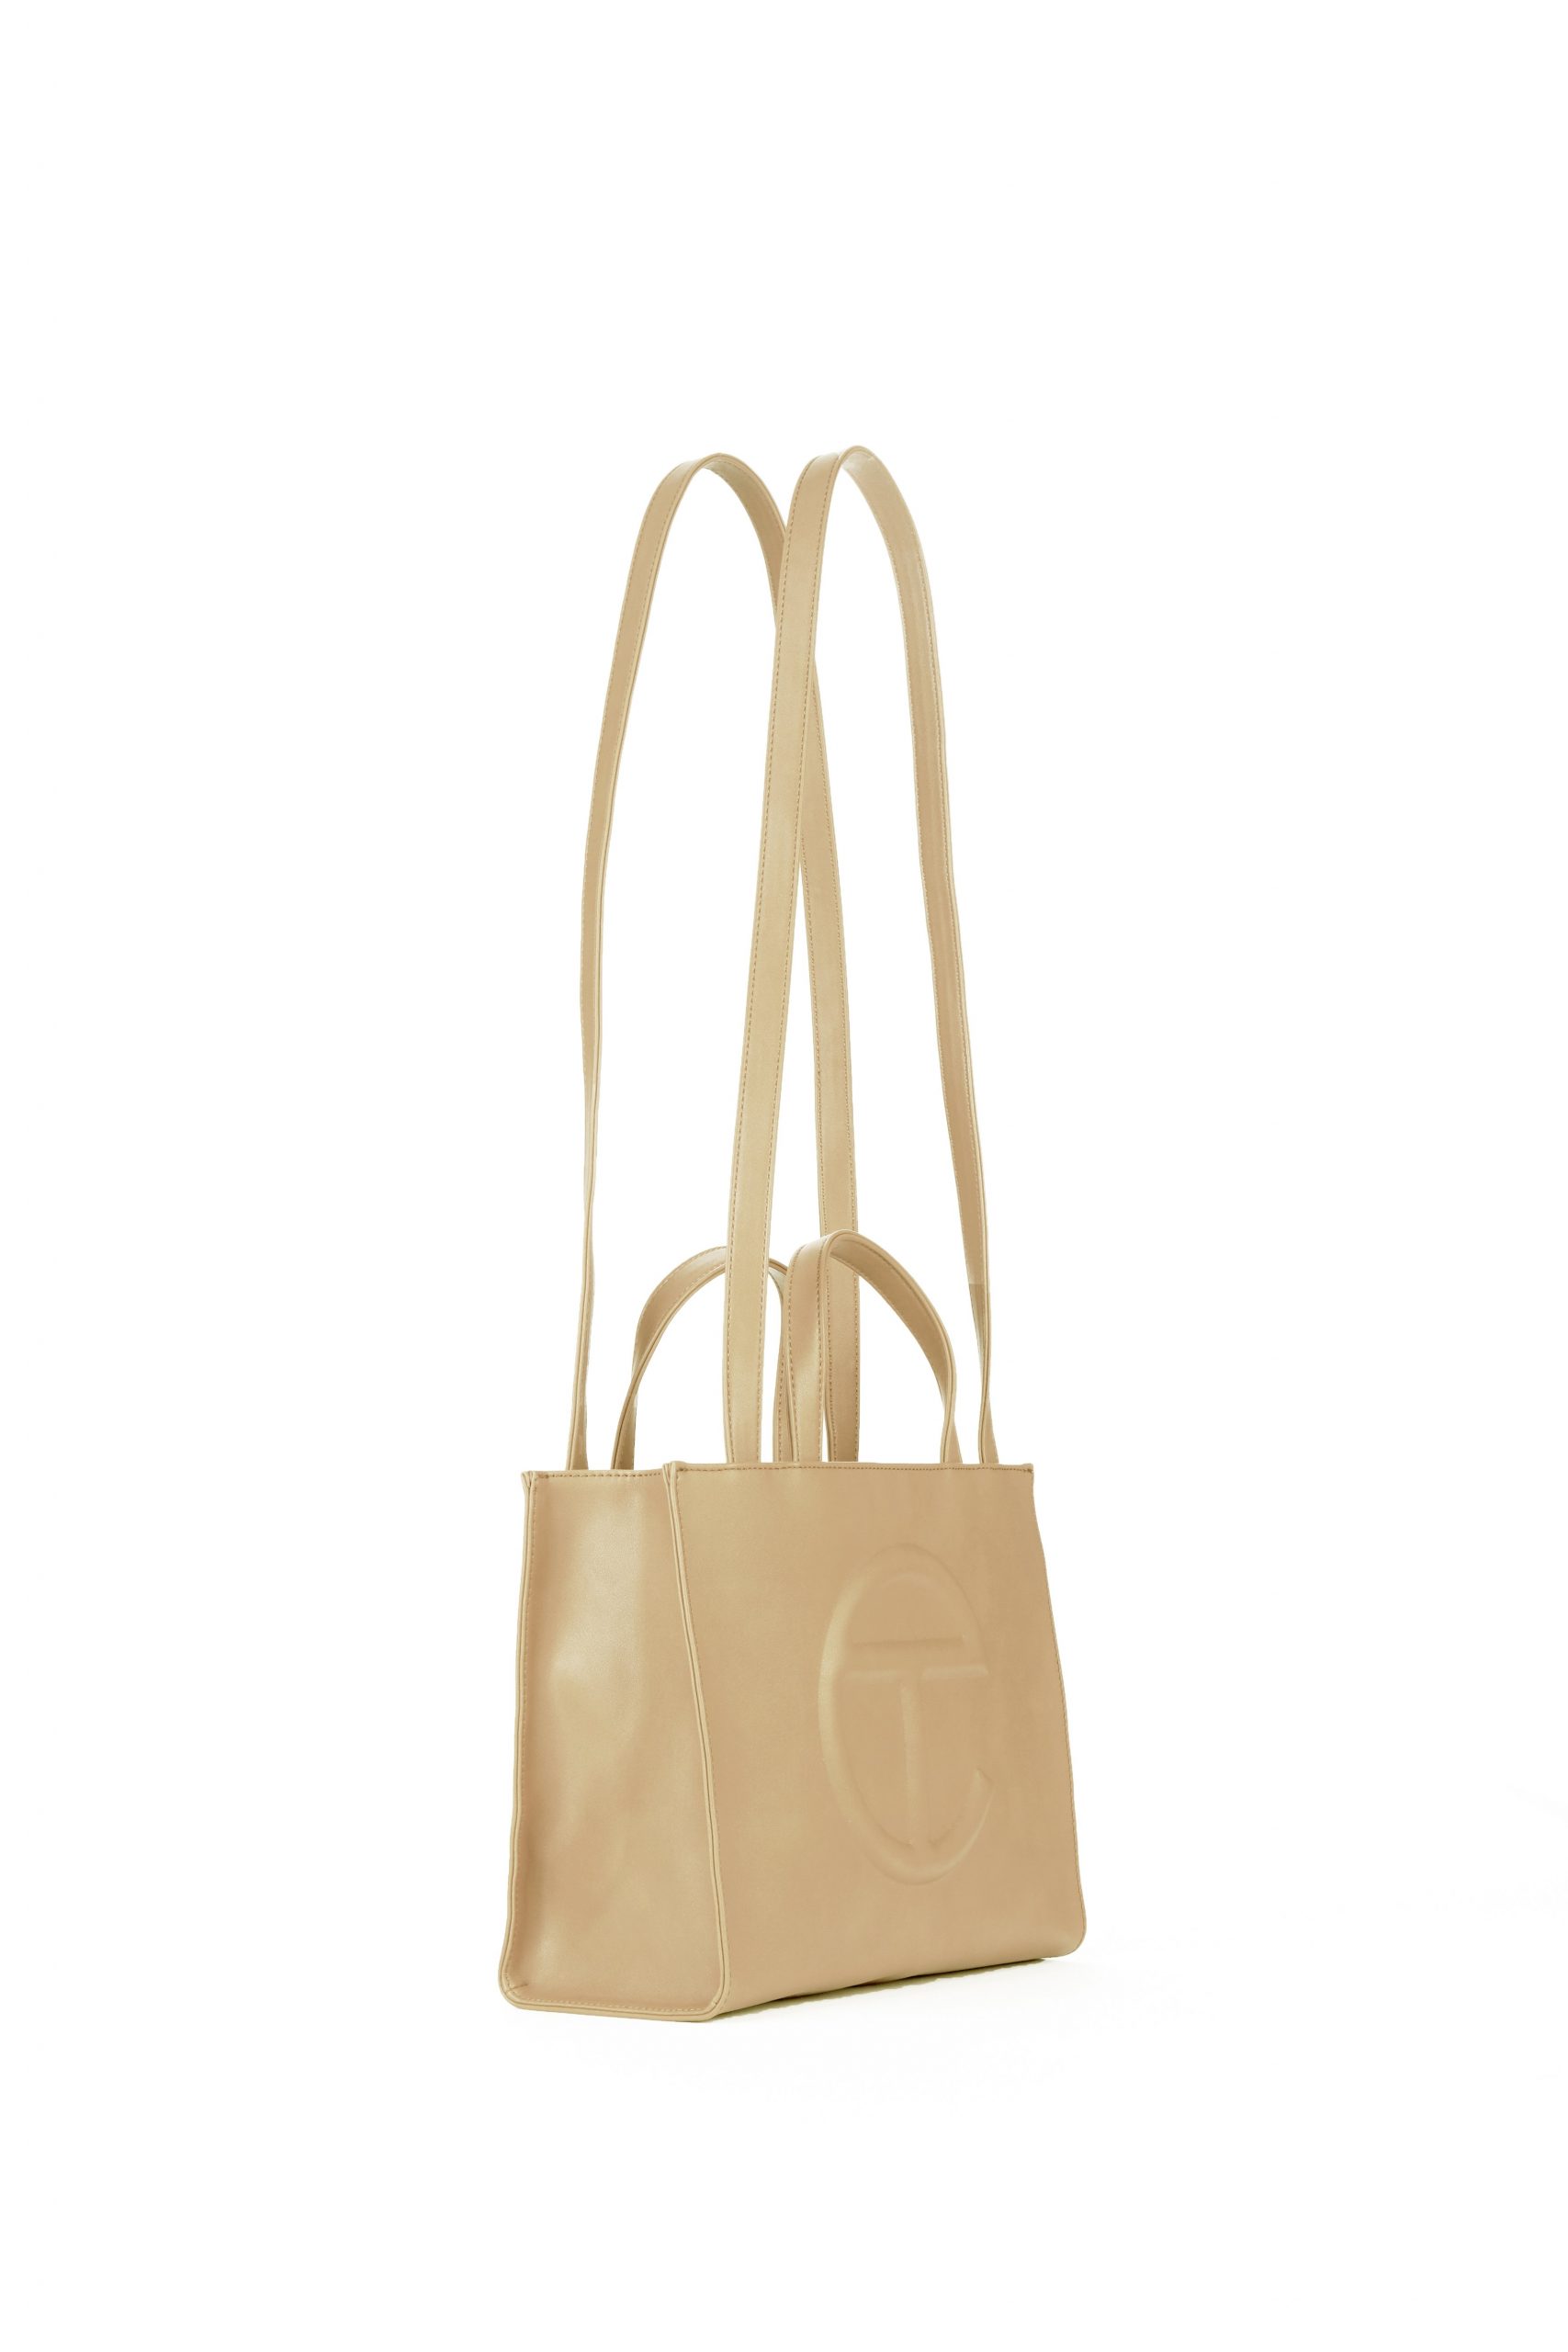 Medium Cream Shopping Bag